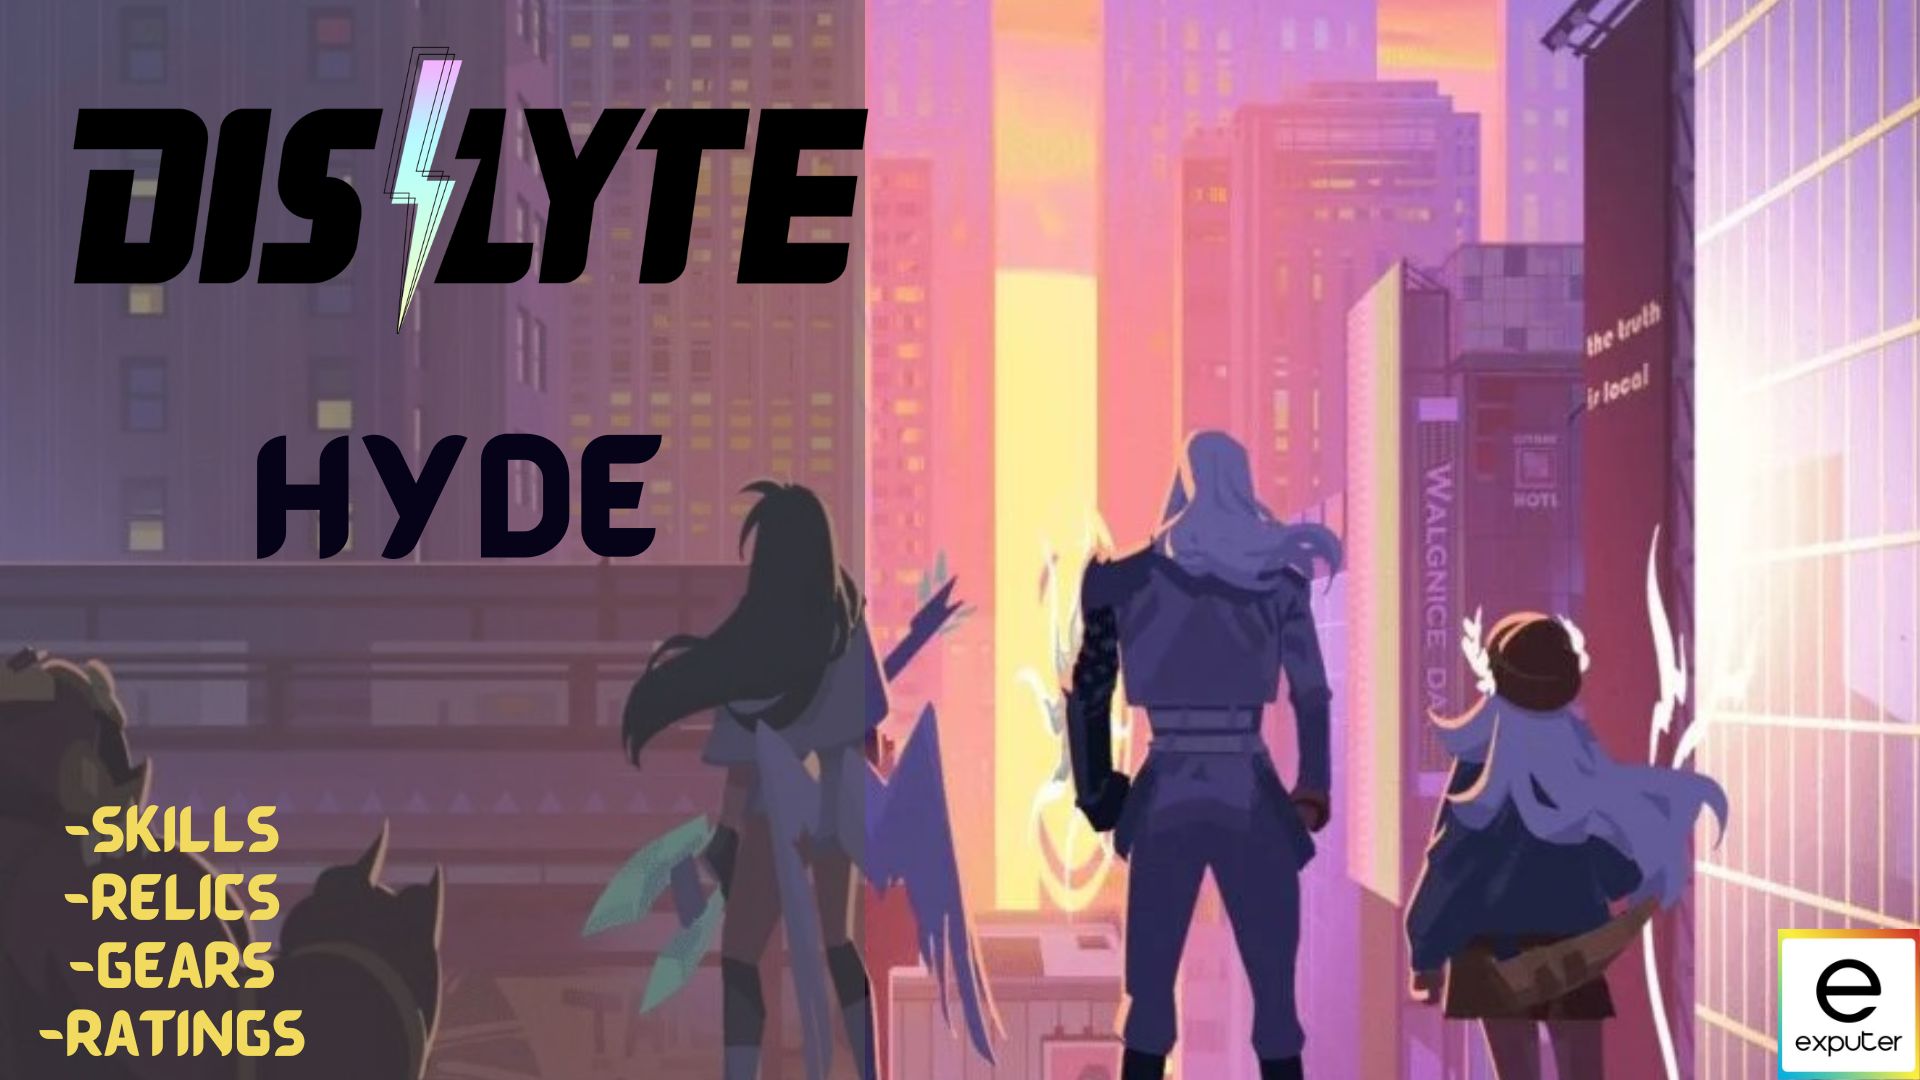 Dislyte Hyde: Skills, Relics, & Build